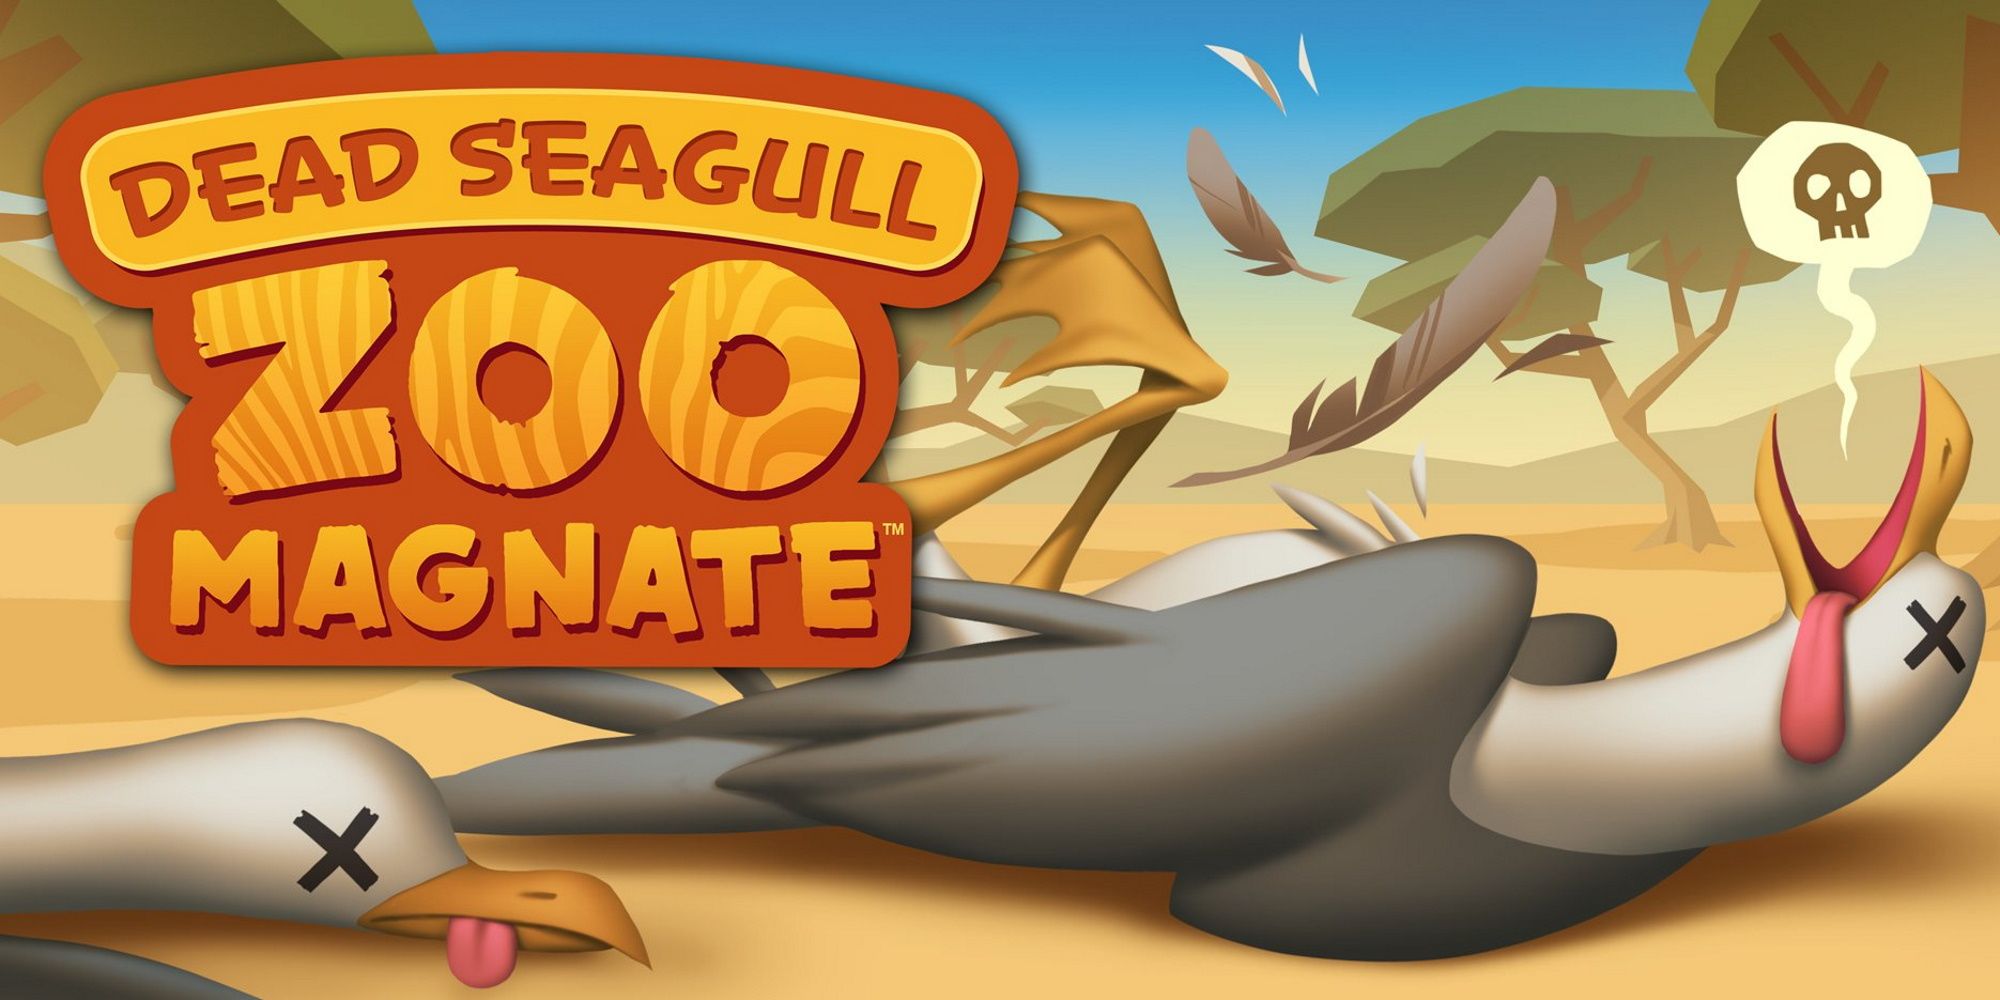 Dead Seagull Magnet Steam Summer Sale 2022 - via Claire Hummel